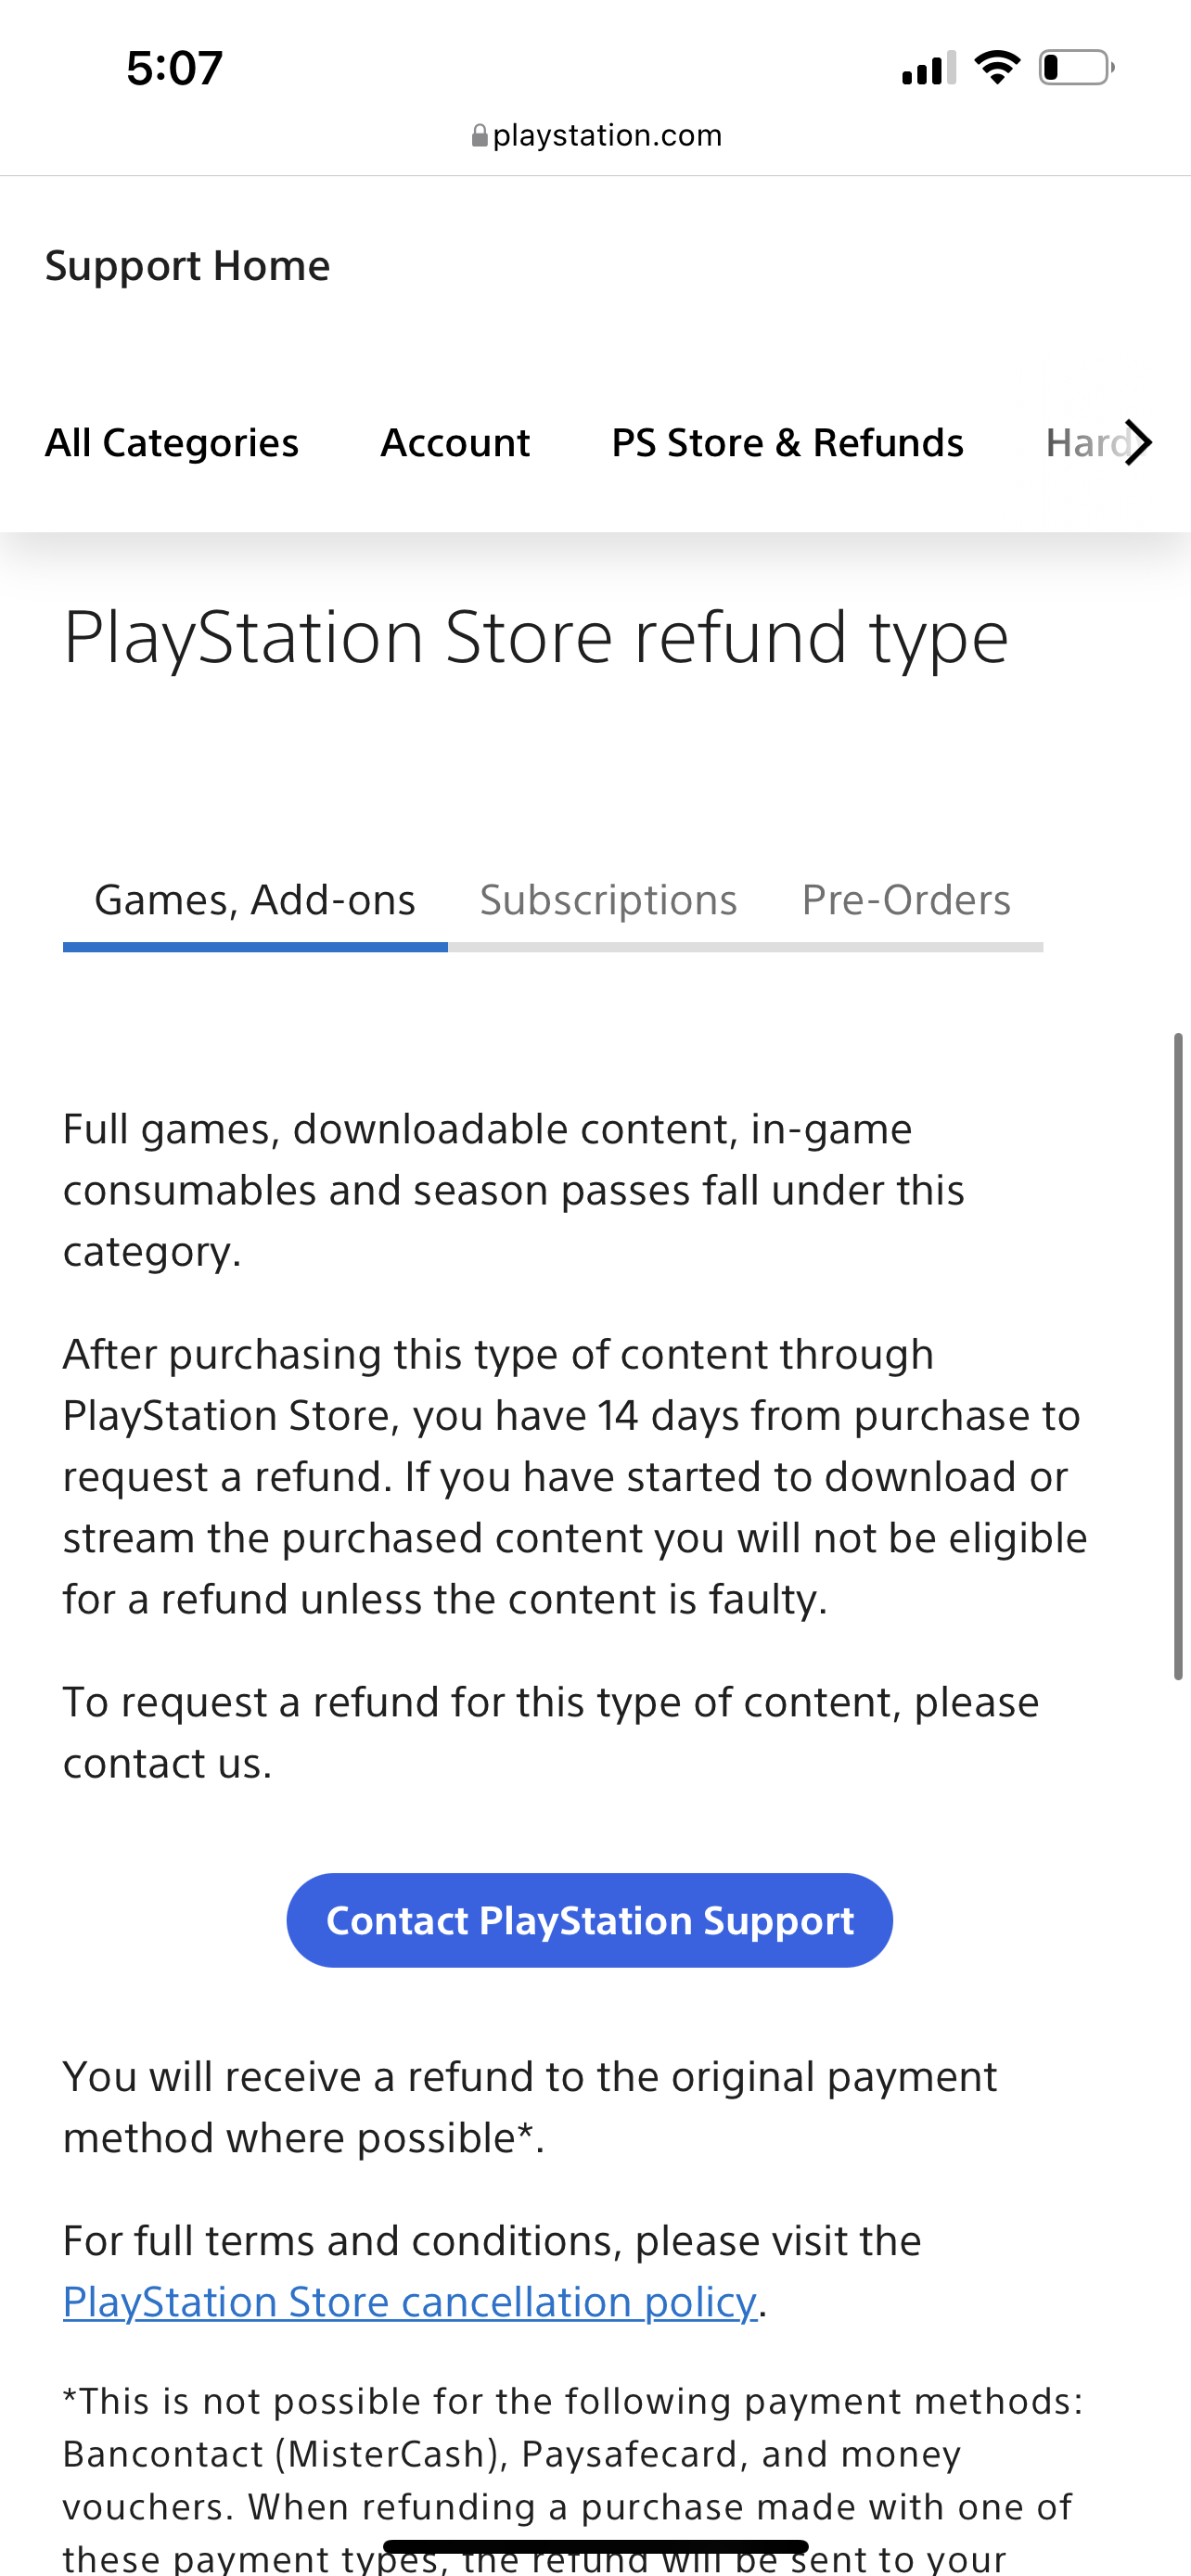 Store Playstation Reviews  Read Customer Service Reviews of store. playstation.com